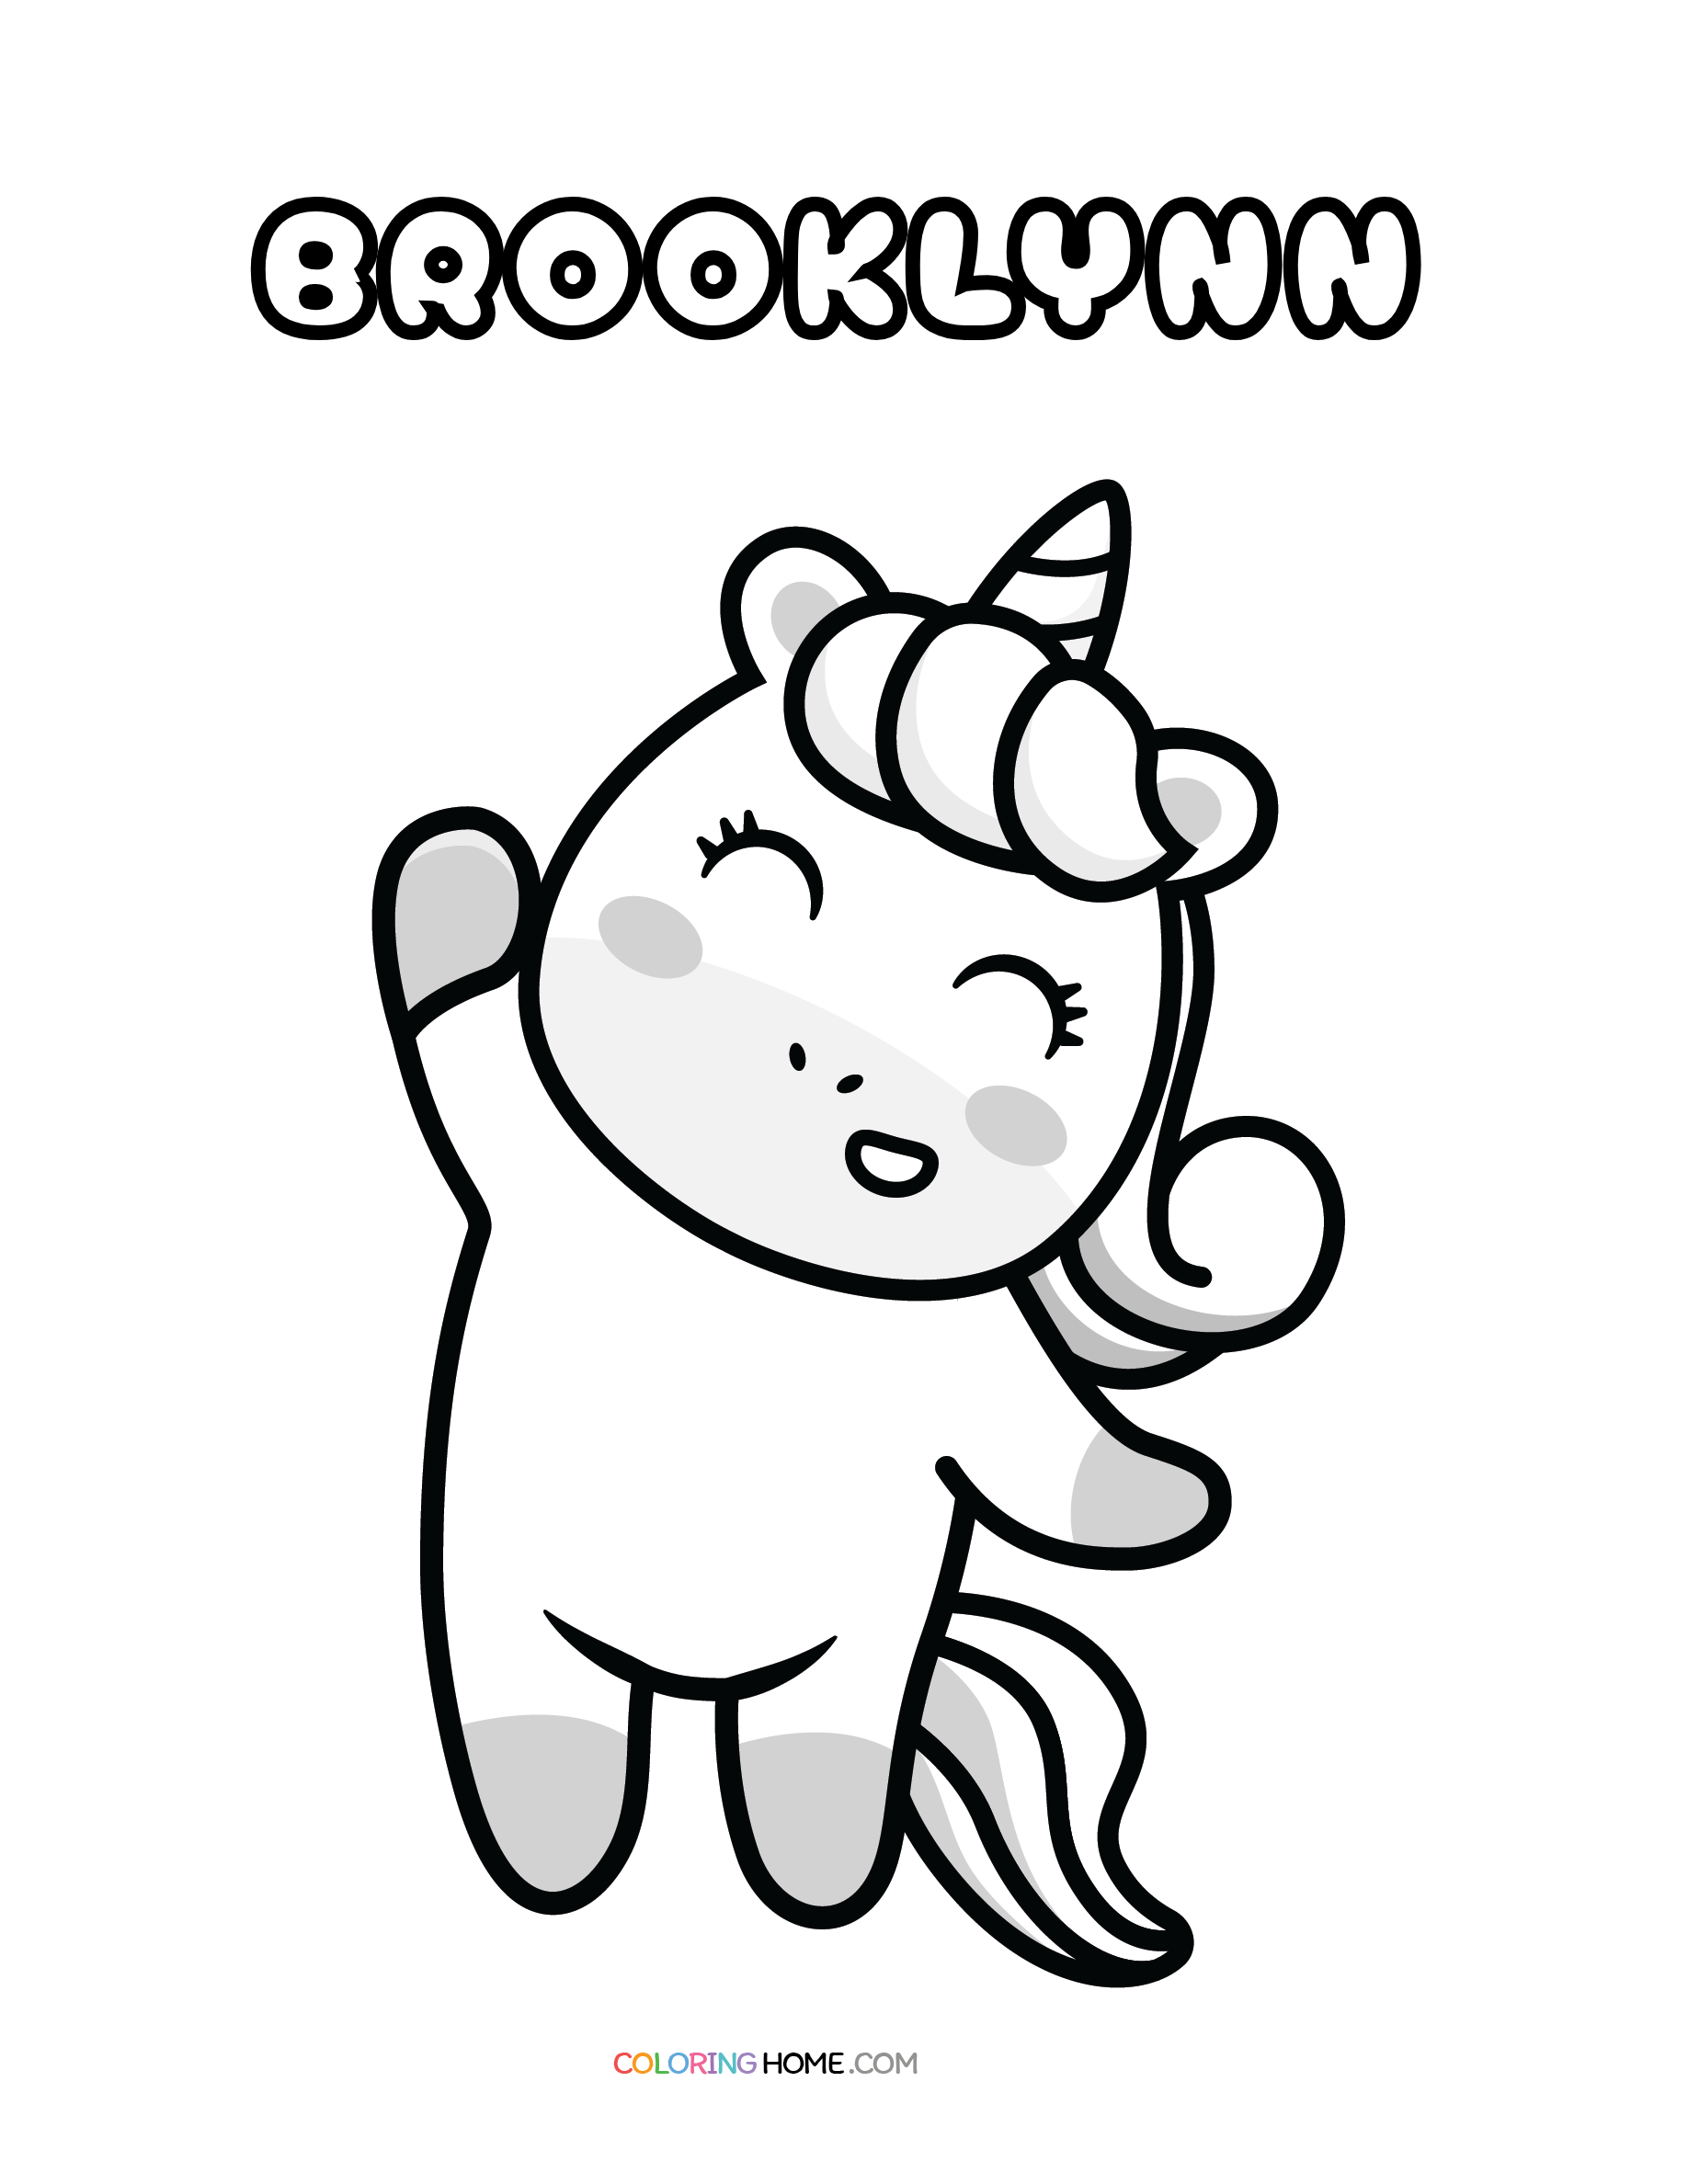 Brooklynn unicorn coloring page